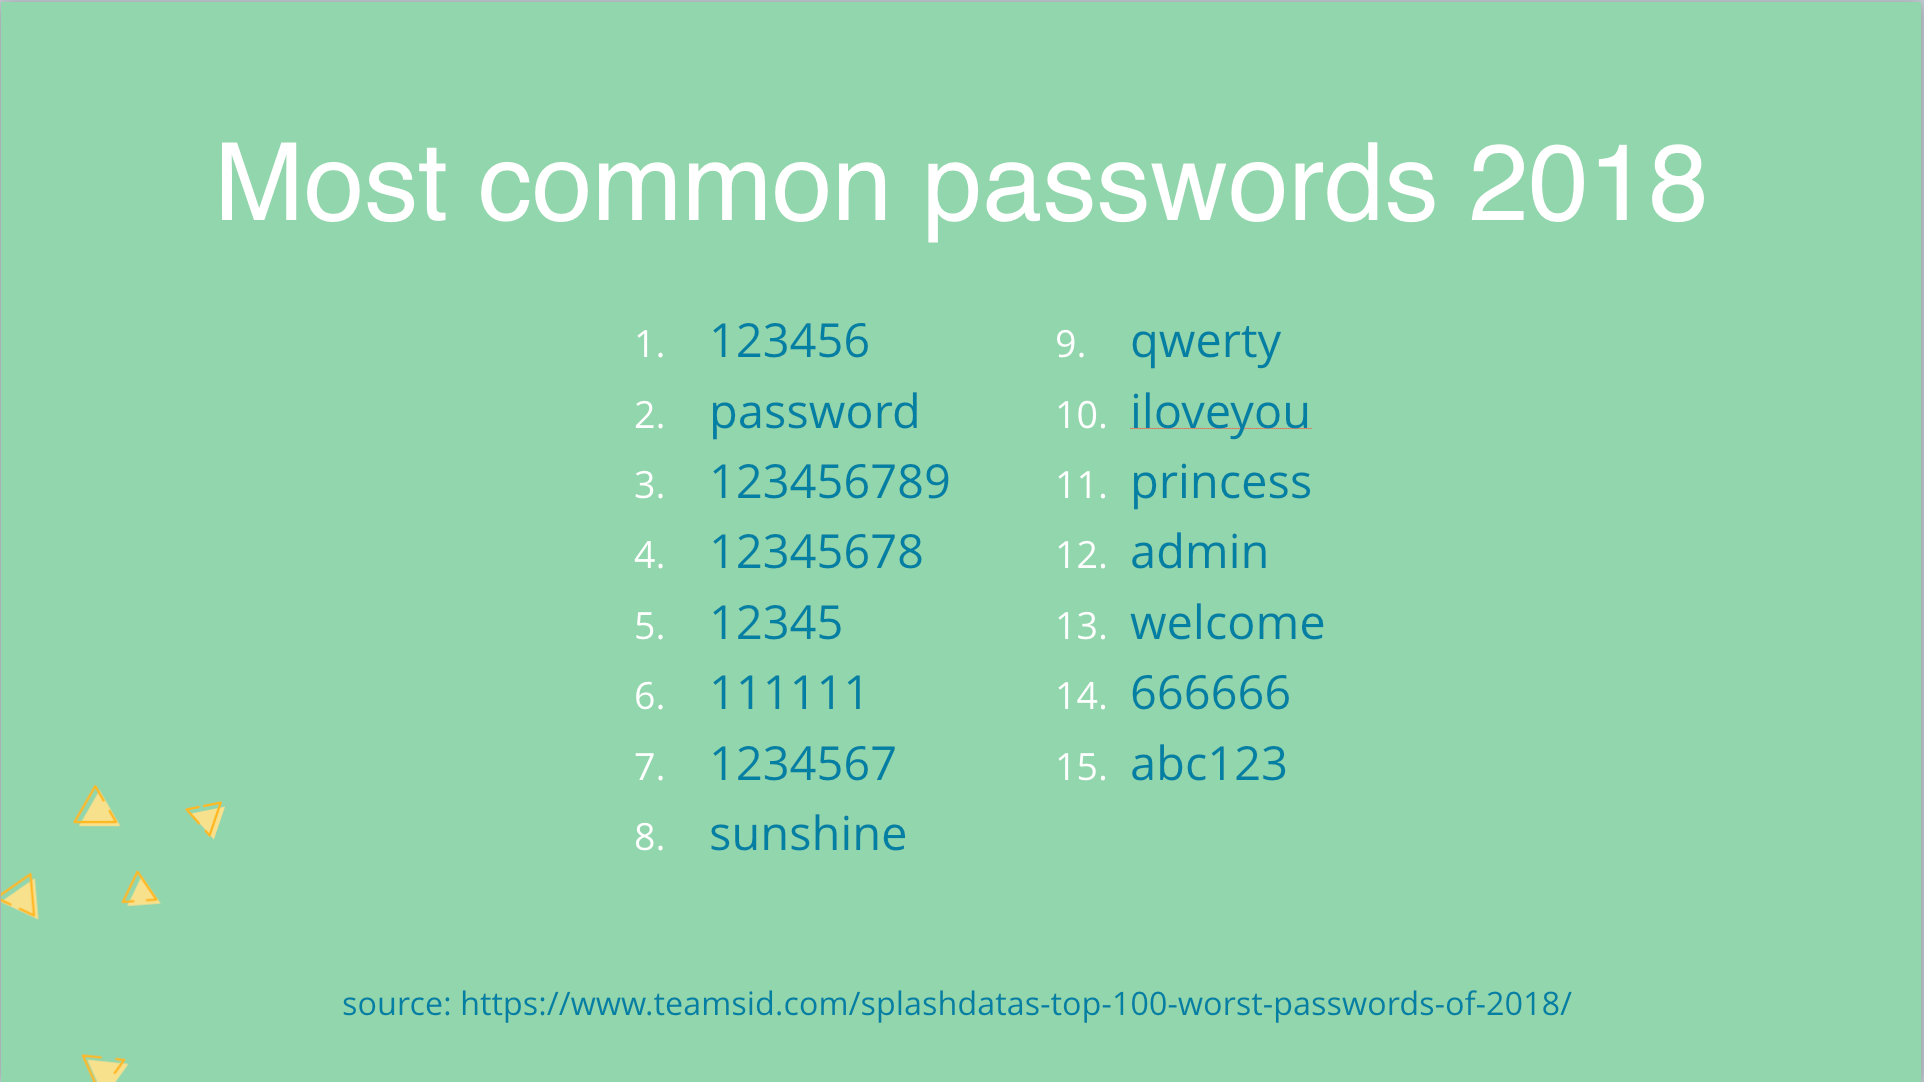 Most common passwords in 2018